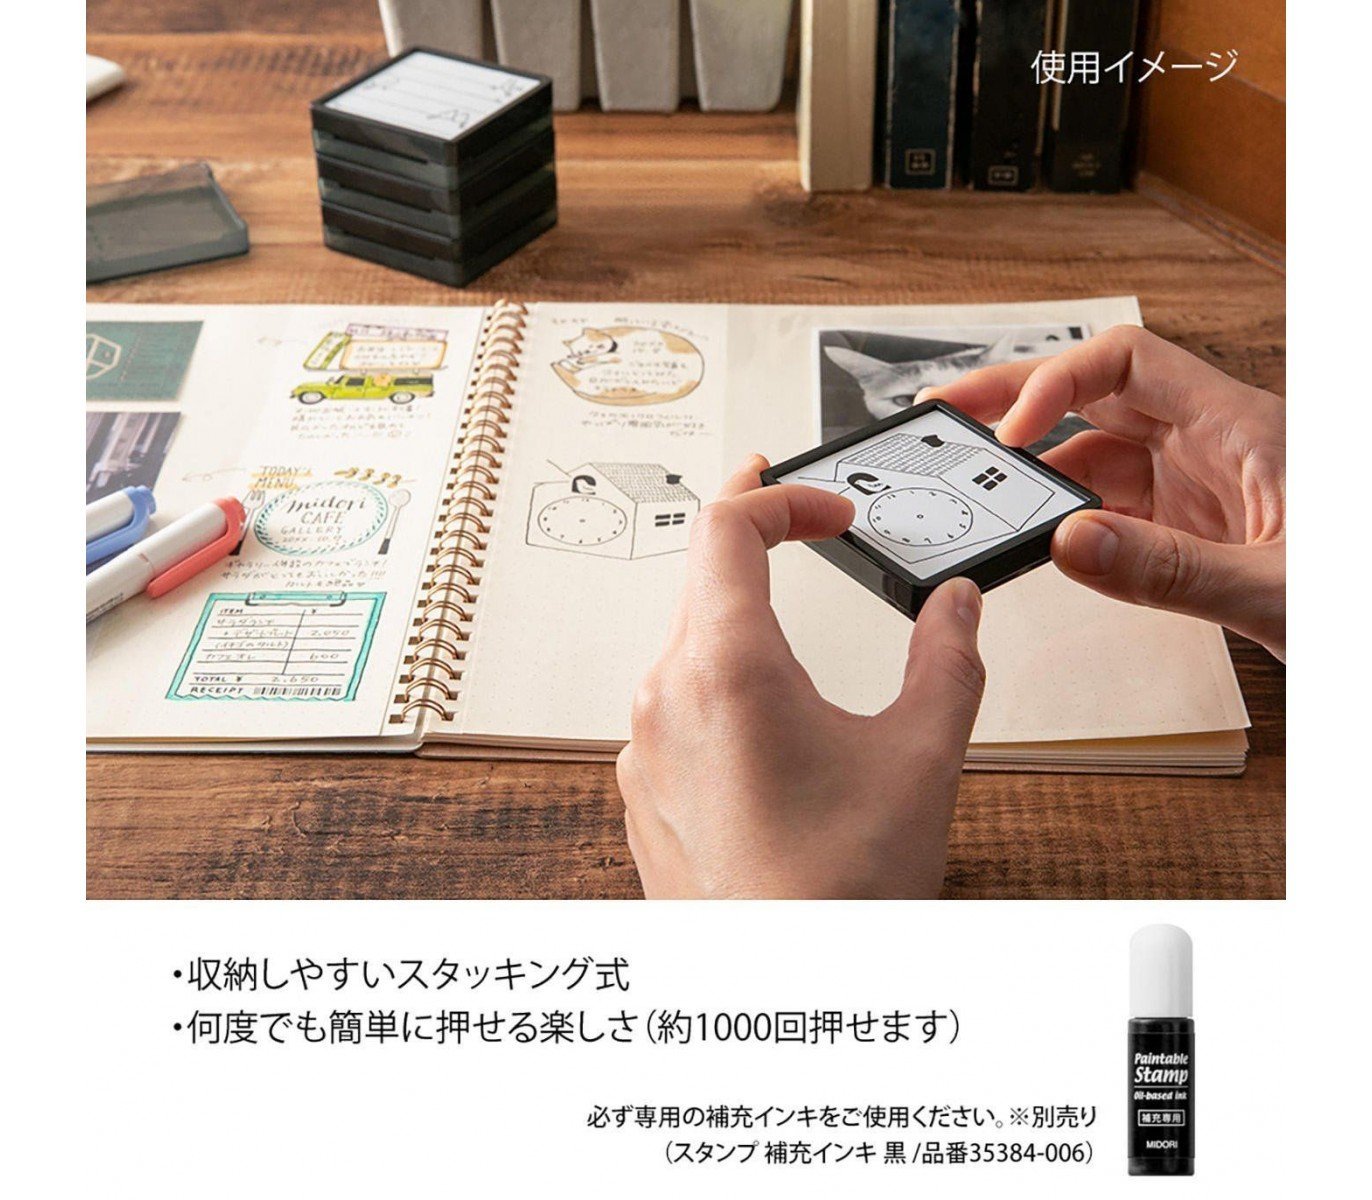 Midori Paintable Stamp - Pre-Inked - Habit Tracker